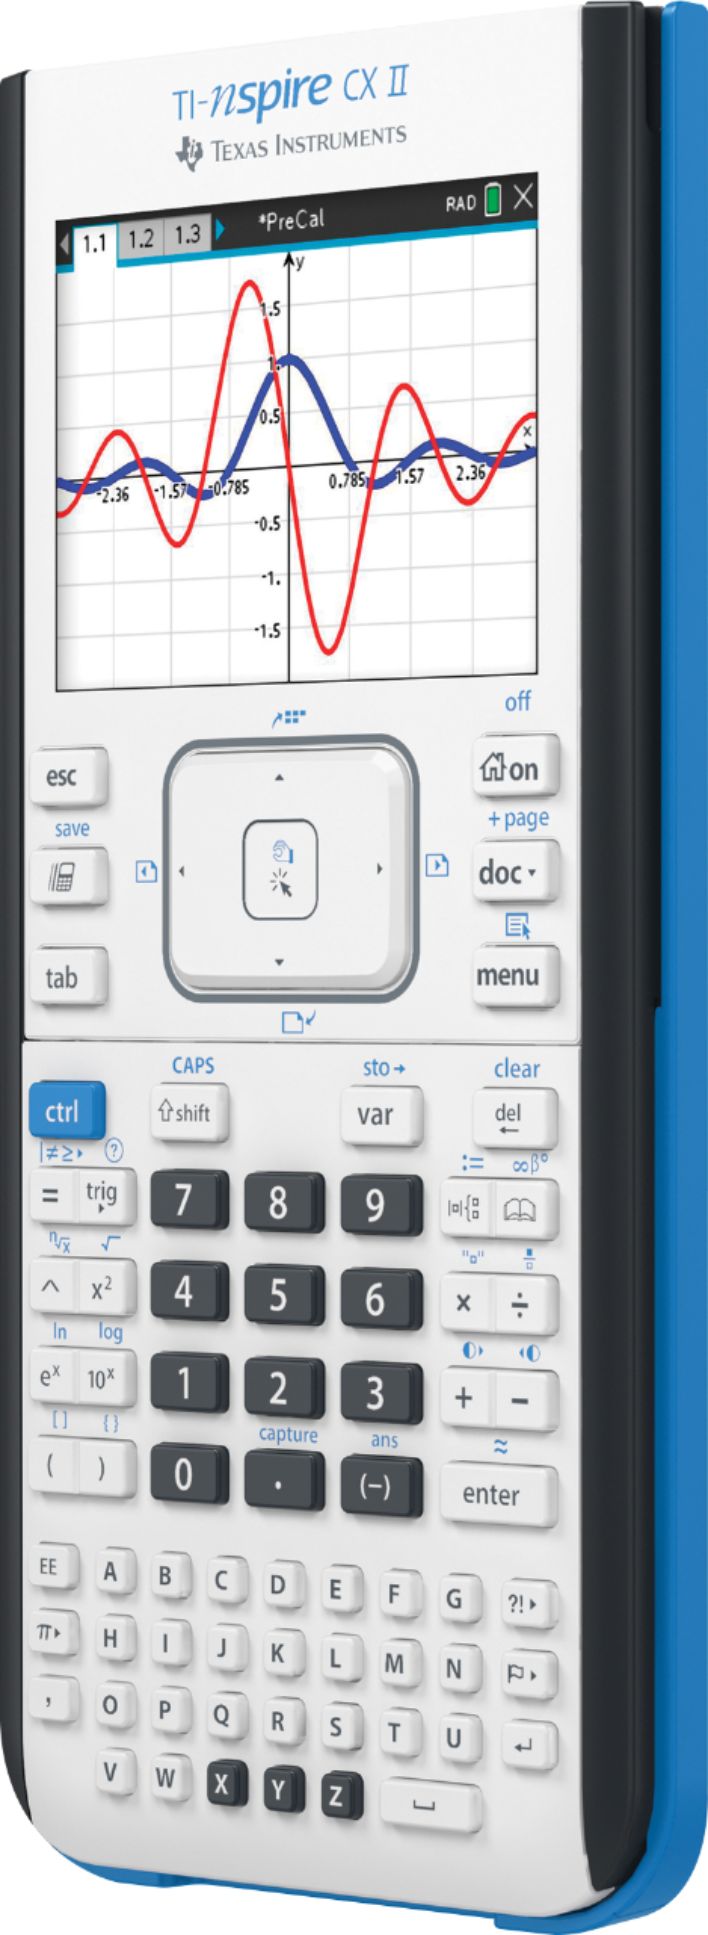 Texas Instruments TI-Nspire CX II Handheld Graphing Calculator